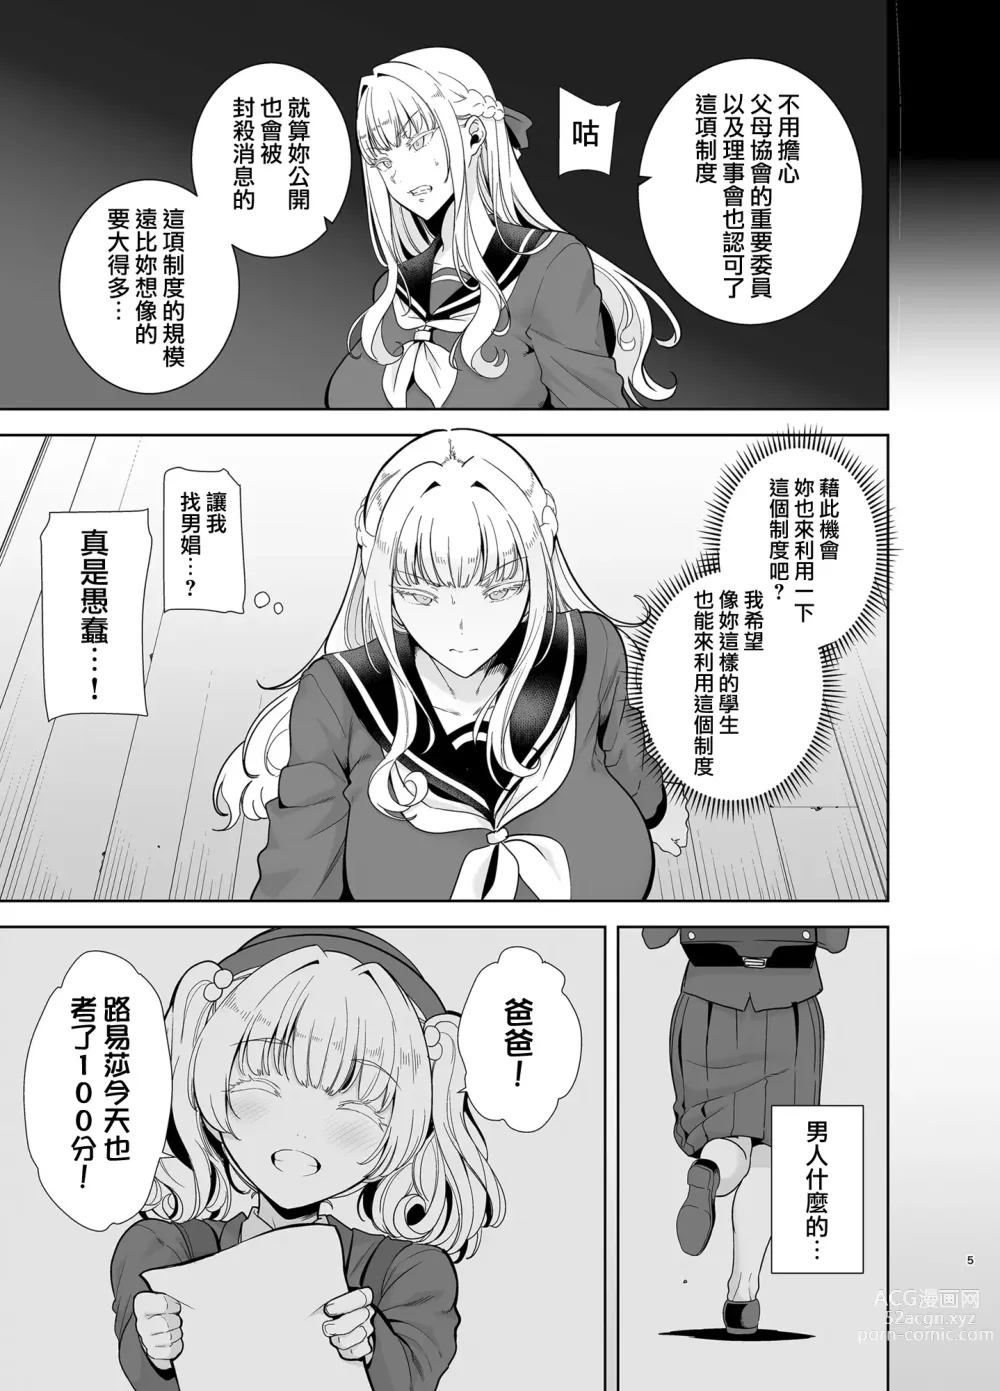 Page 5 of manga 聖華女学院高等部公認竿おじさん 4